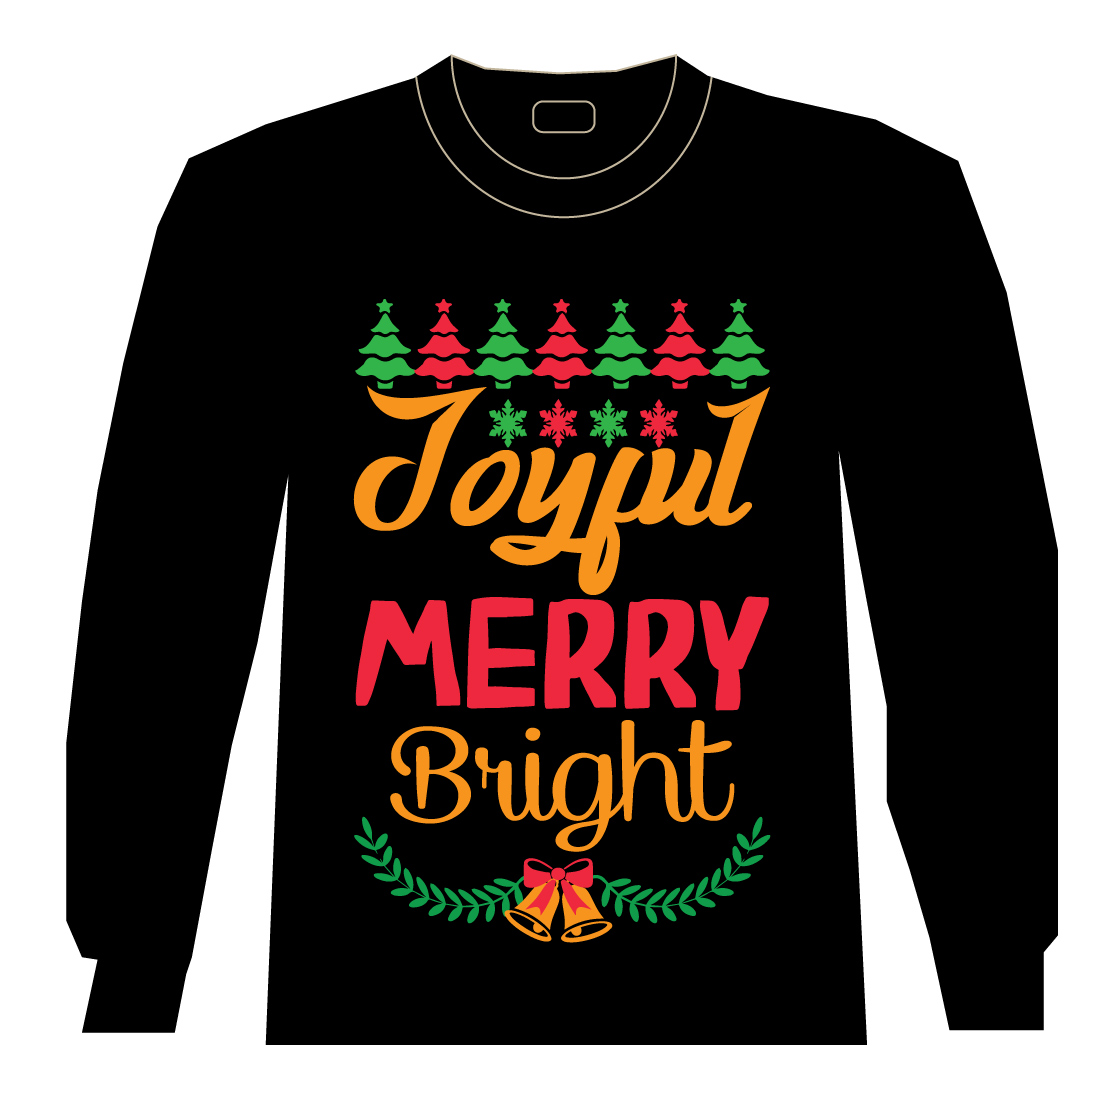 Christmas "Joyful Merry Bright" T-Shirt Design cover image.